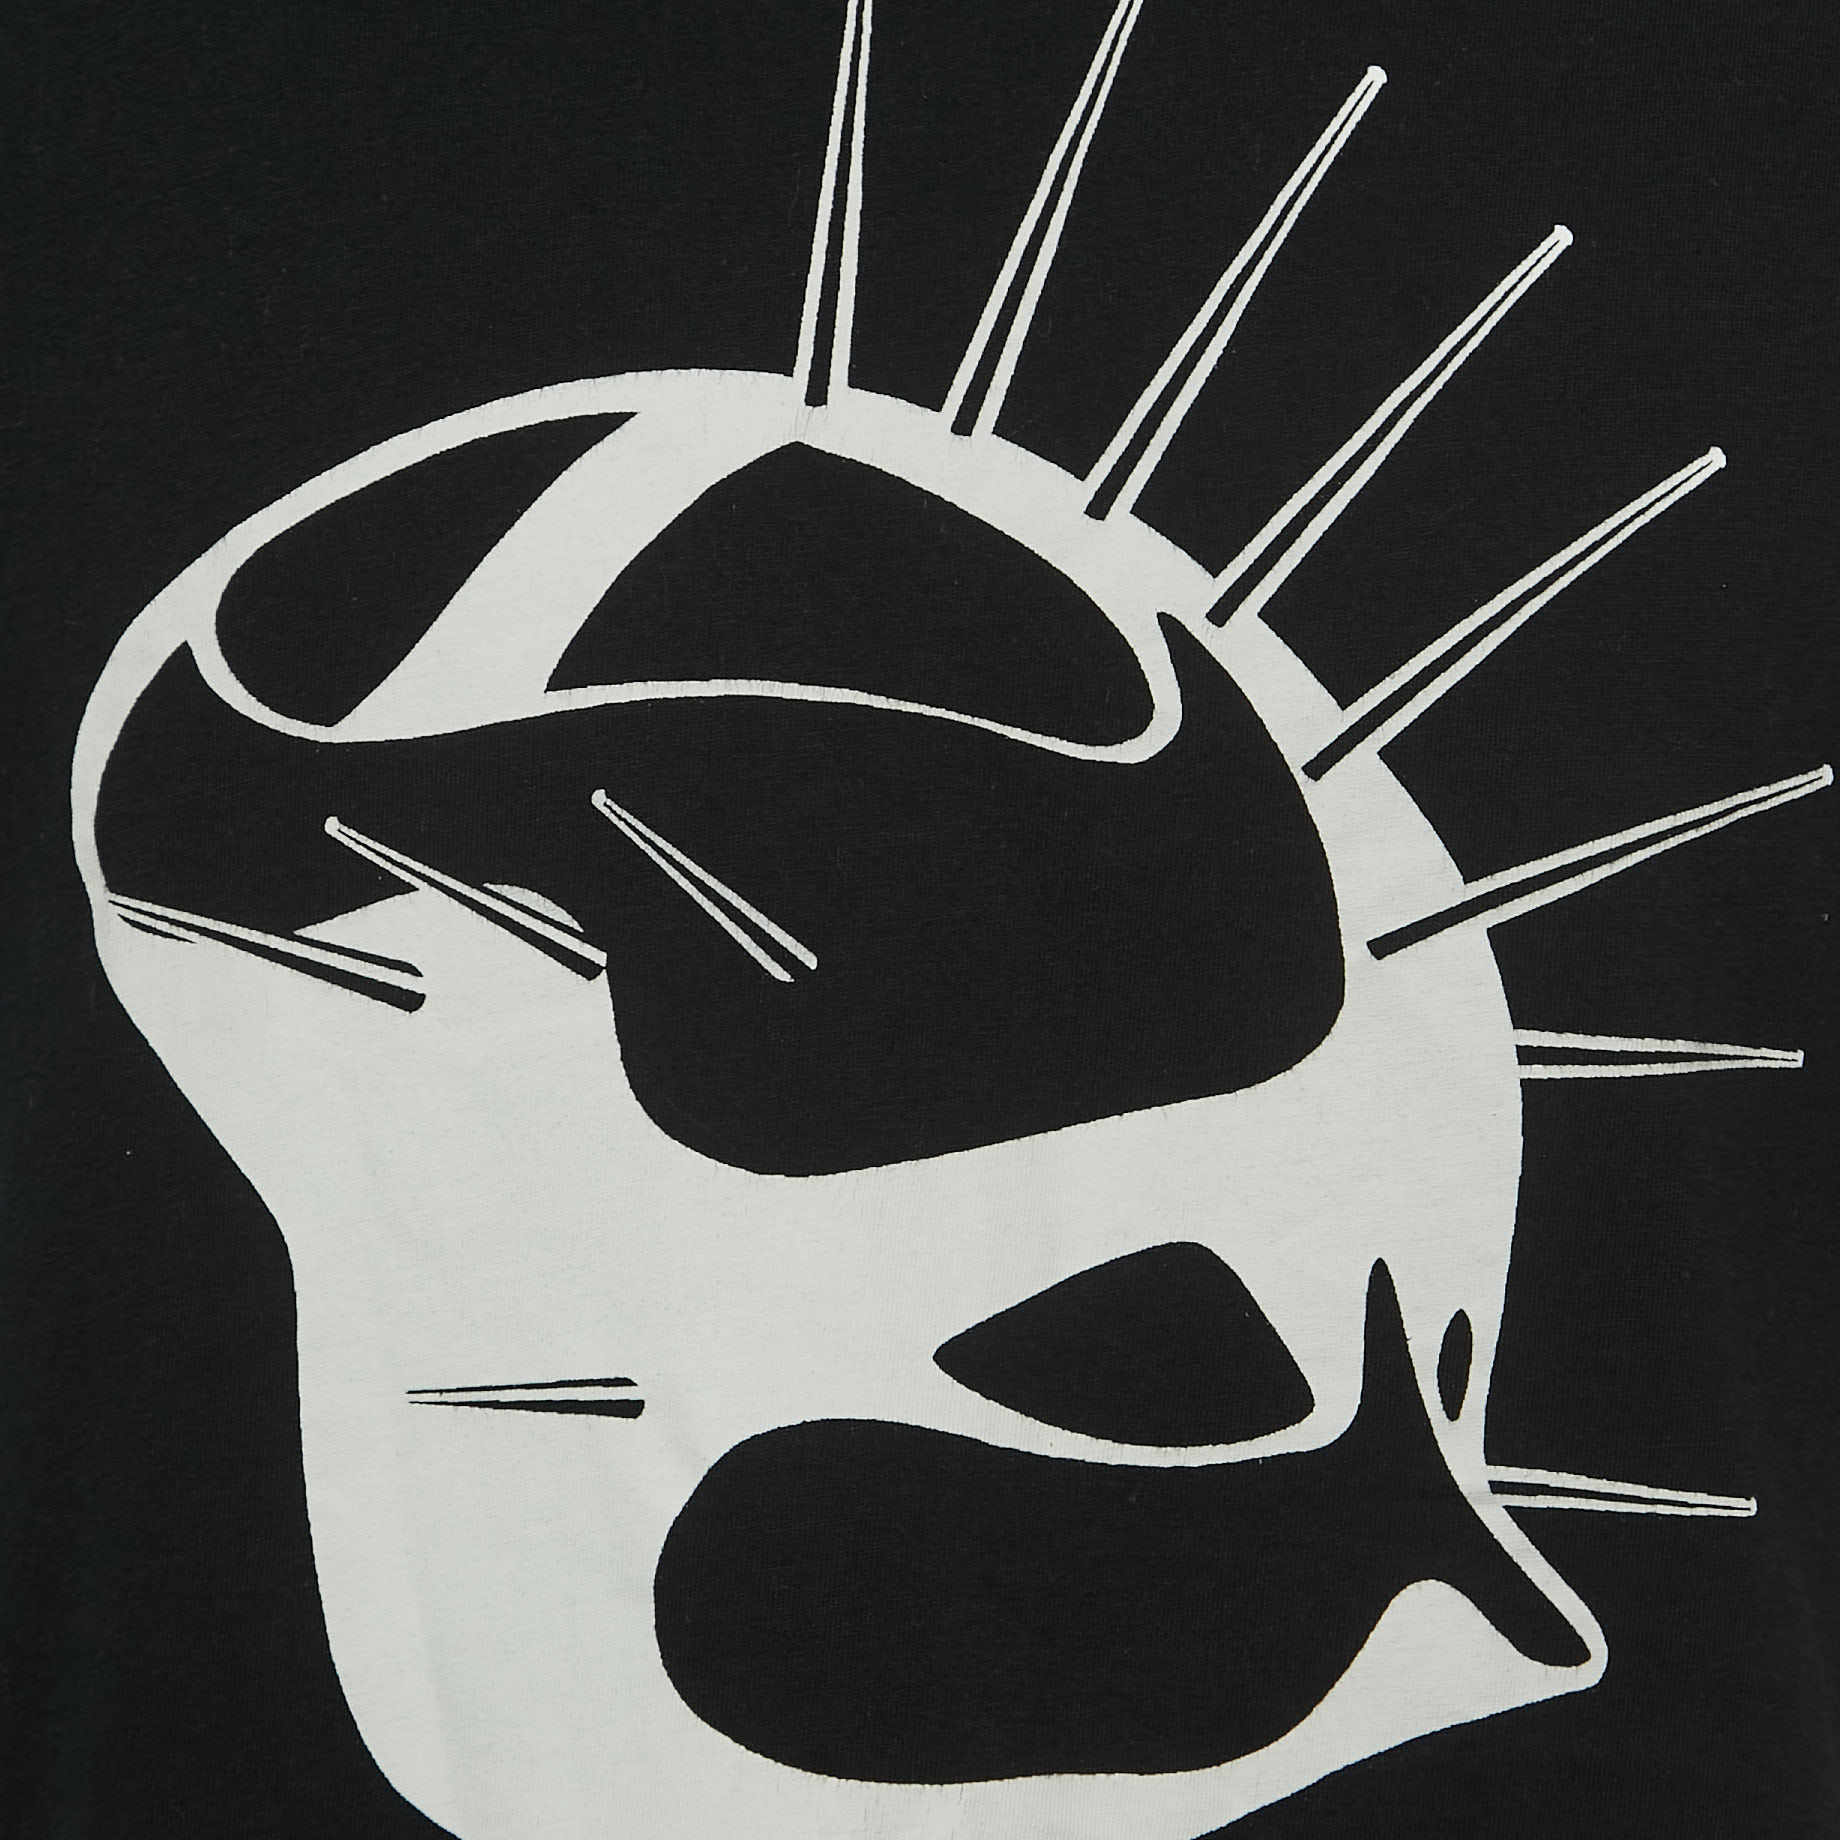 Gucci Black Logo Print Cotton Half Sleeve T-Shirt S